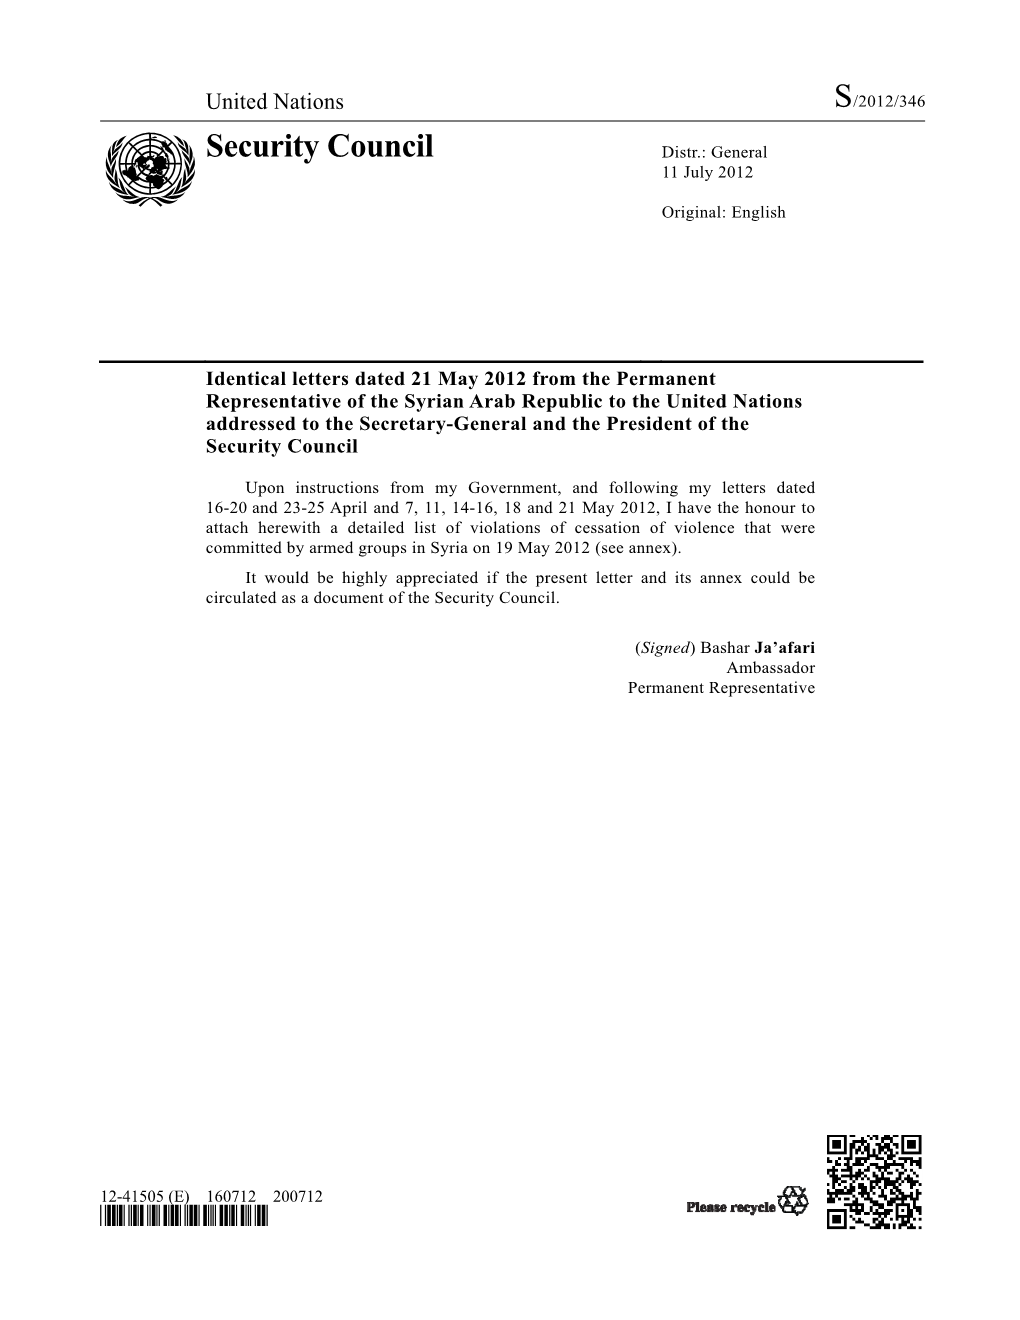 Security Council Distr.: General 11 July 2012